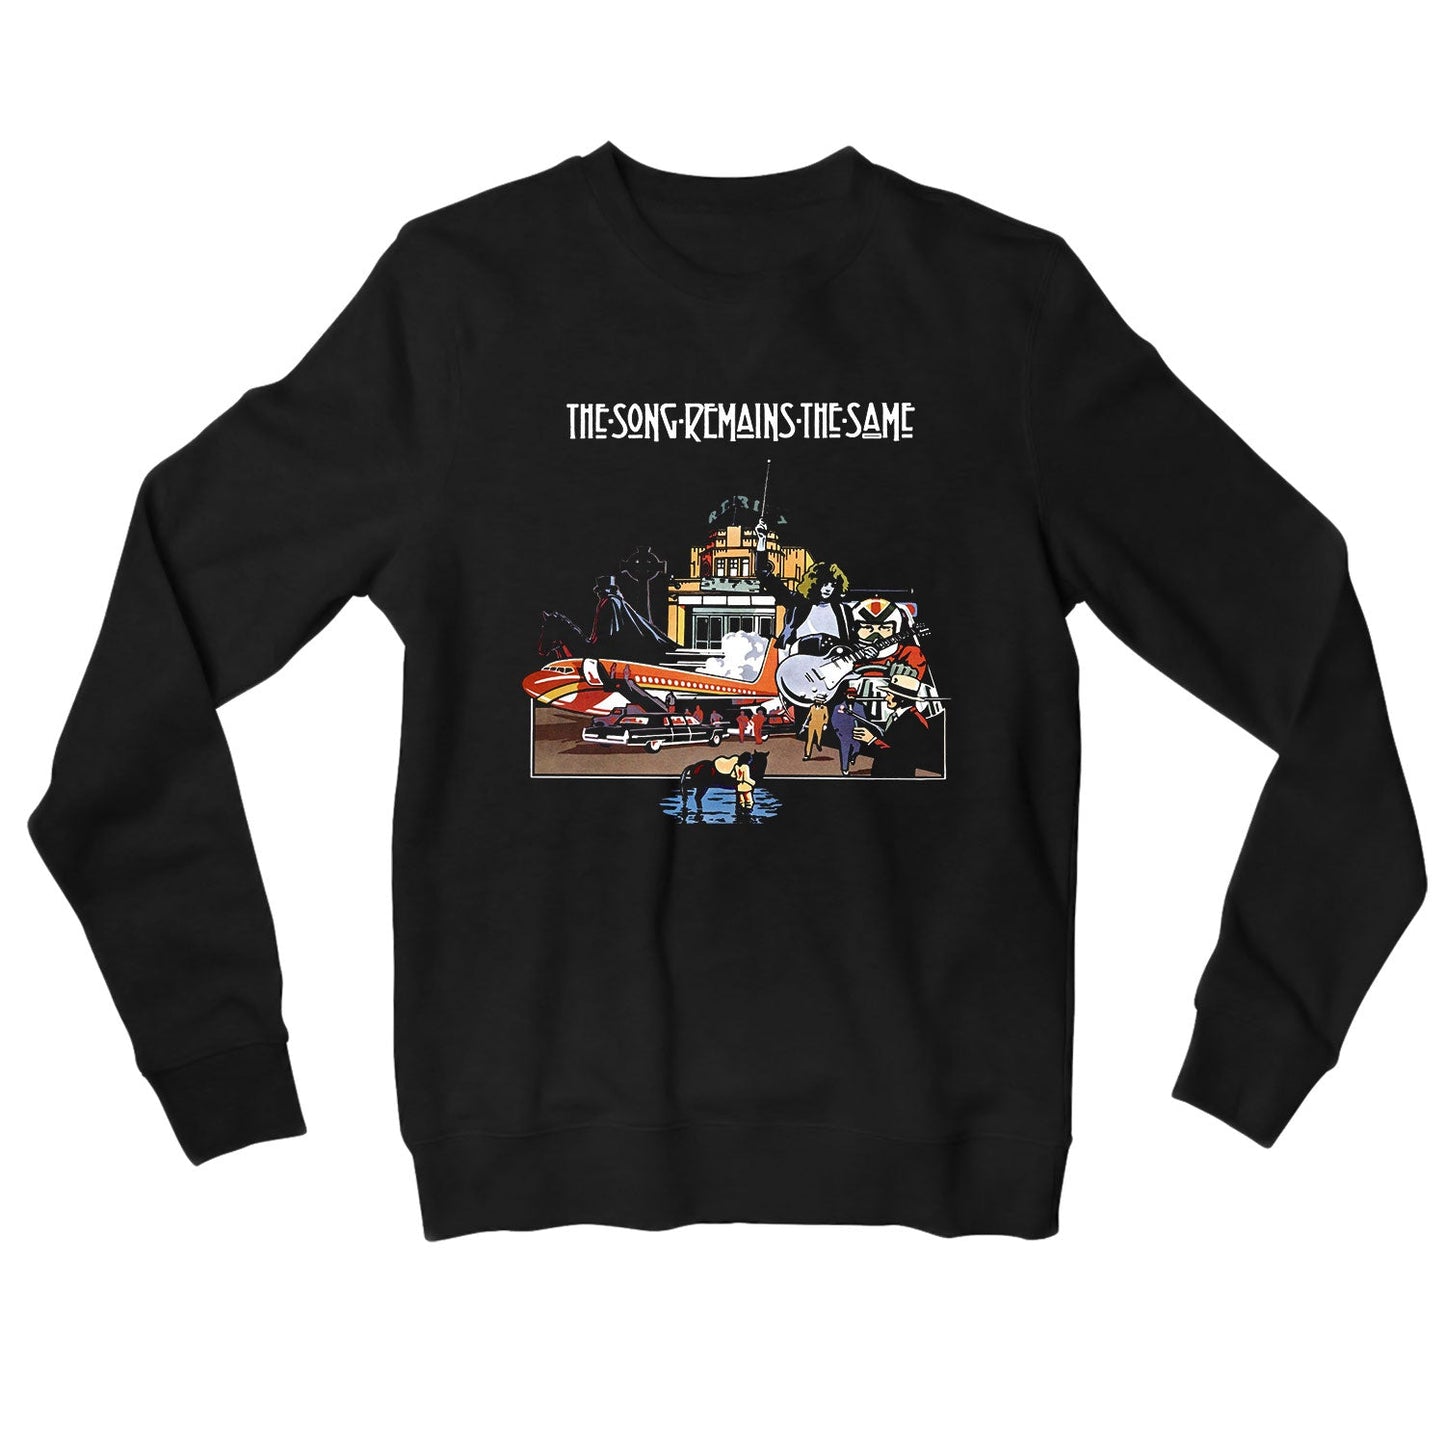 Led Zeppelin Sweatshirt - The Song Remains The Same Sweatshirt The Banyan Tee TBT